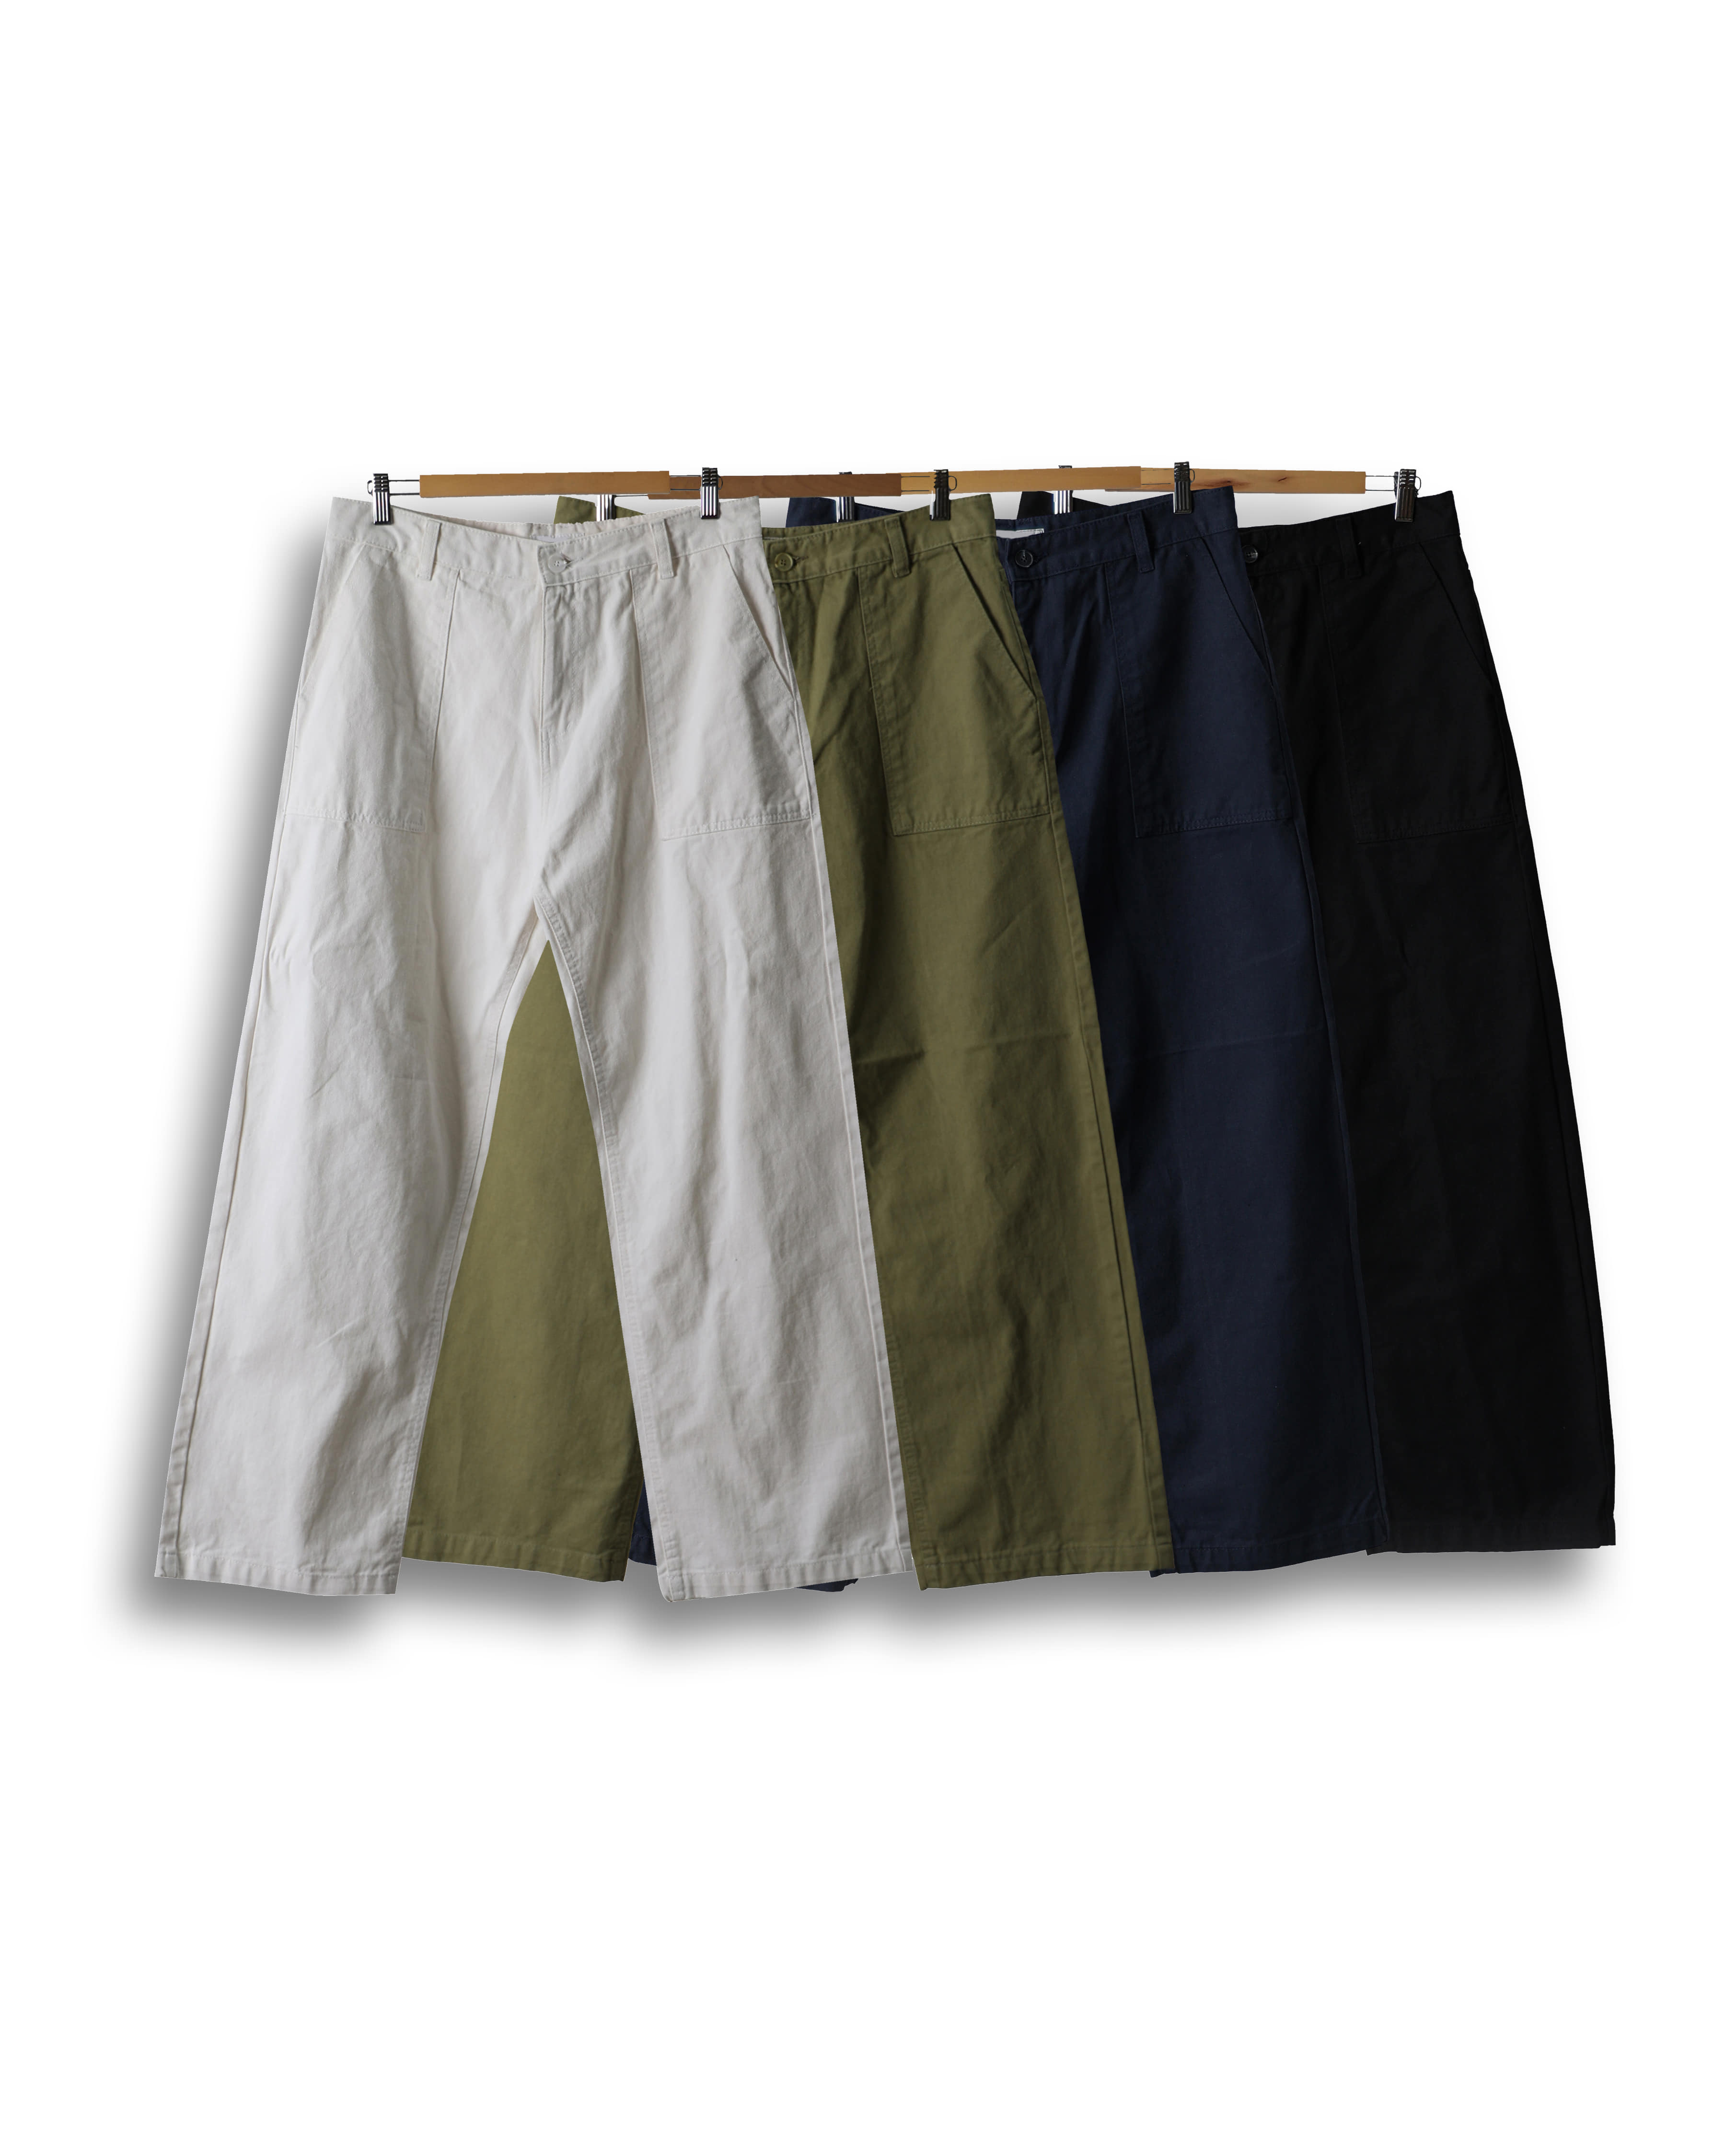 MAD Origin Fatigue Straight Pants (Black/Navy/Olive/White)